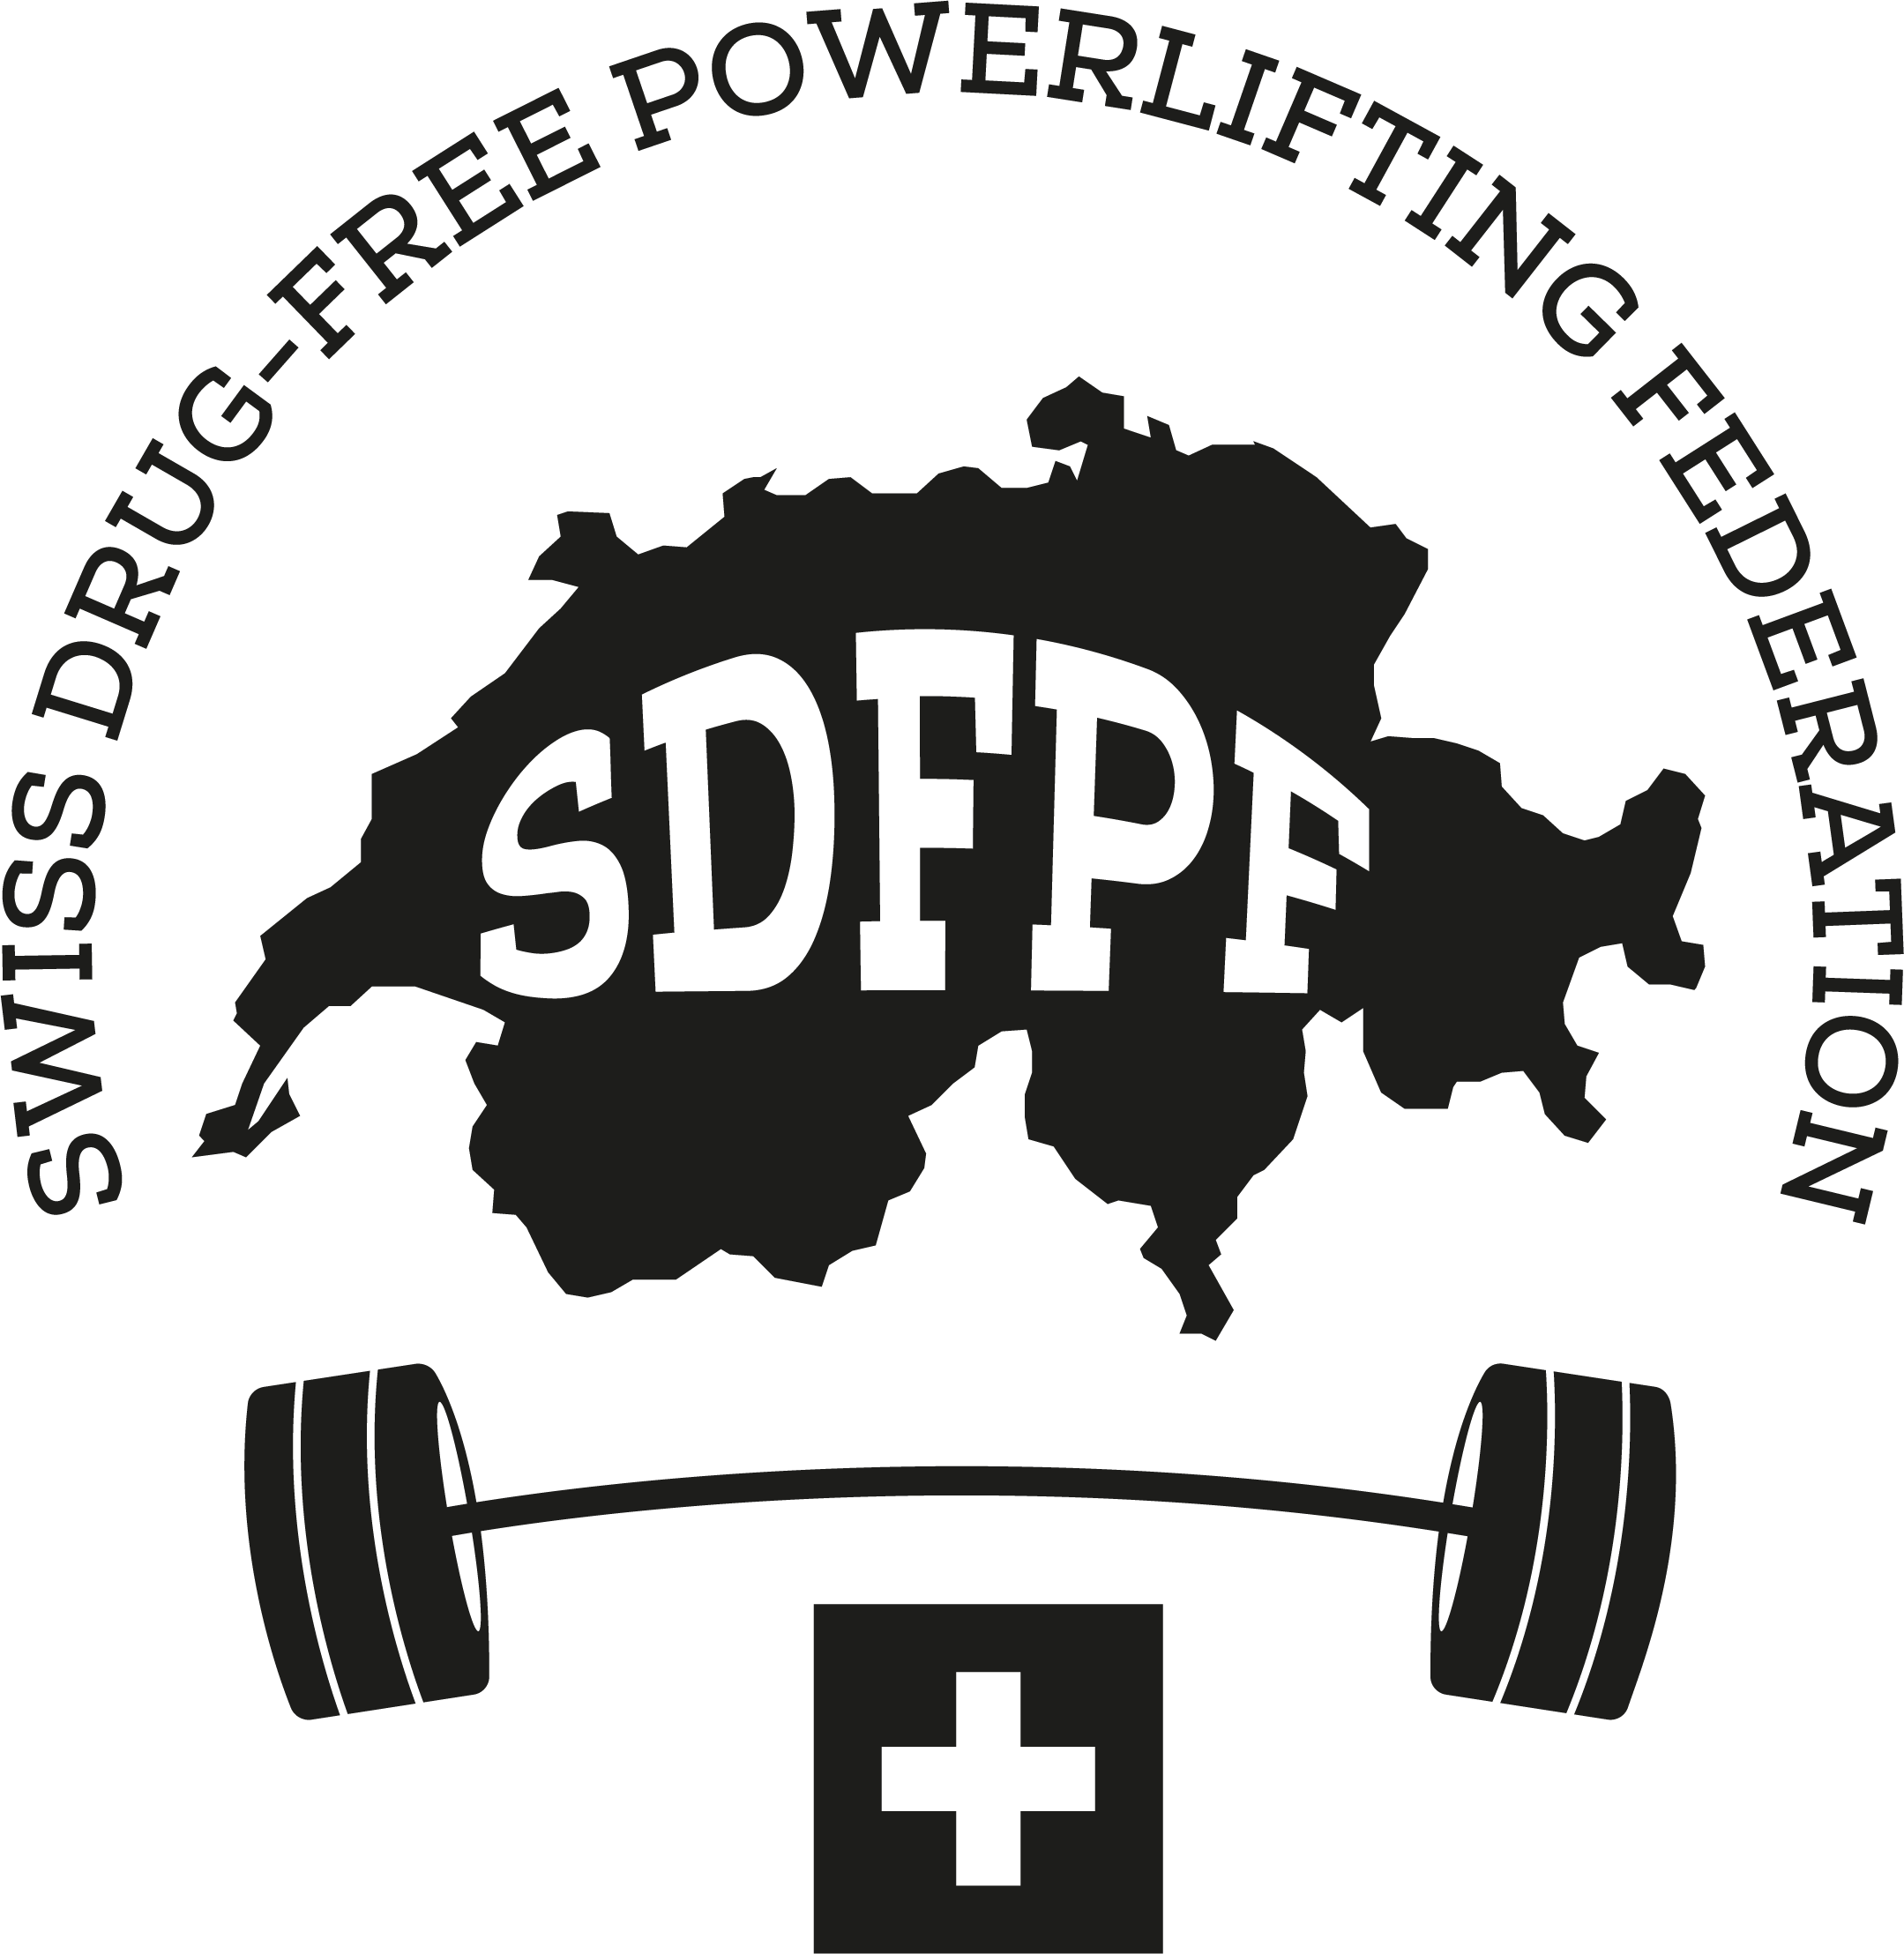 Swiss Drug-Free Powerlifting Federation